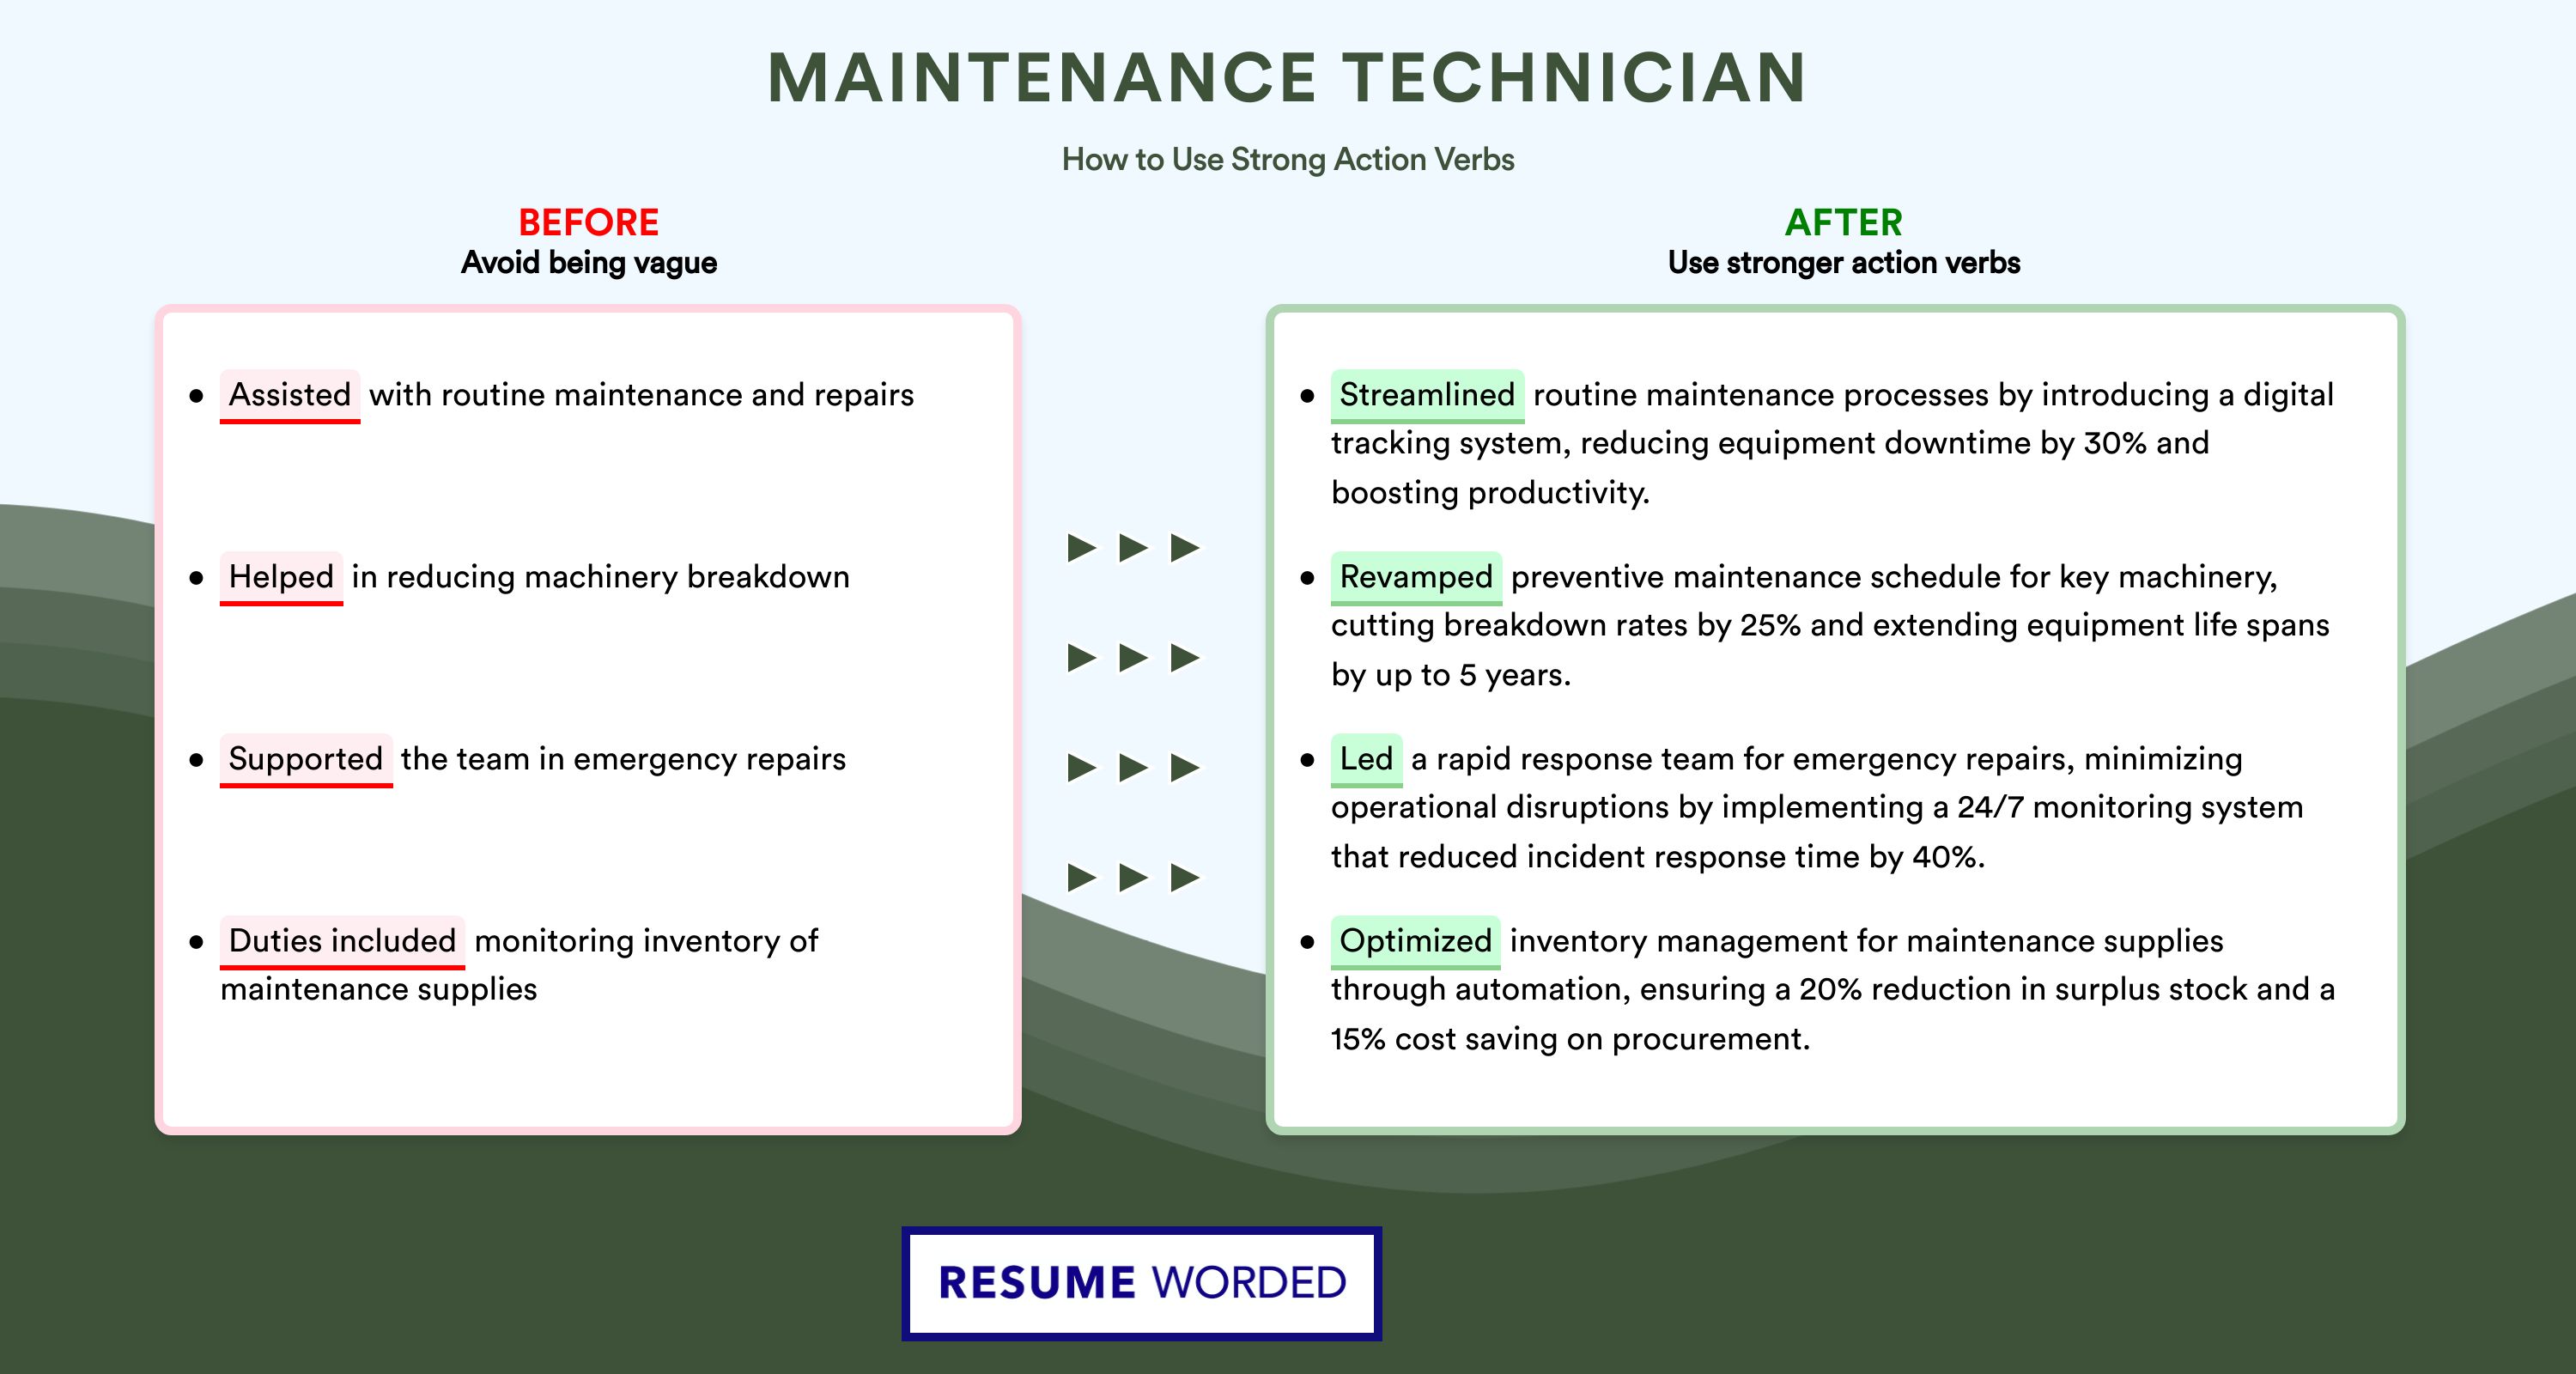 Action Verbs for Maintenance Technician